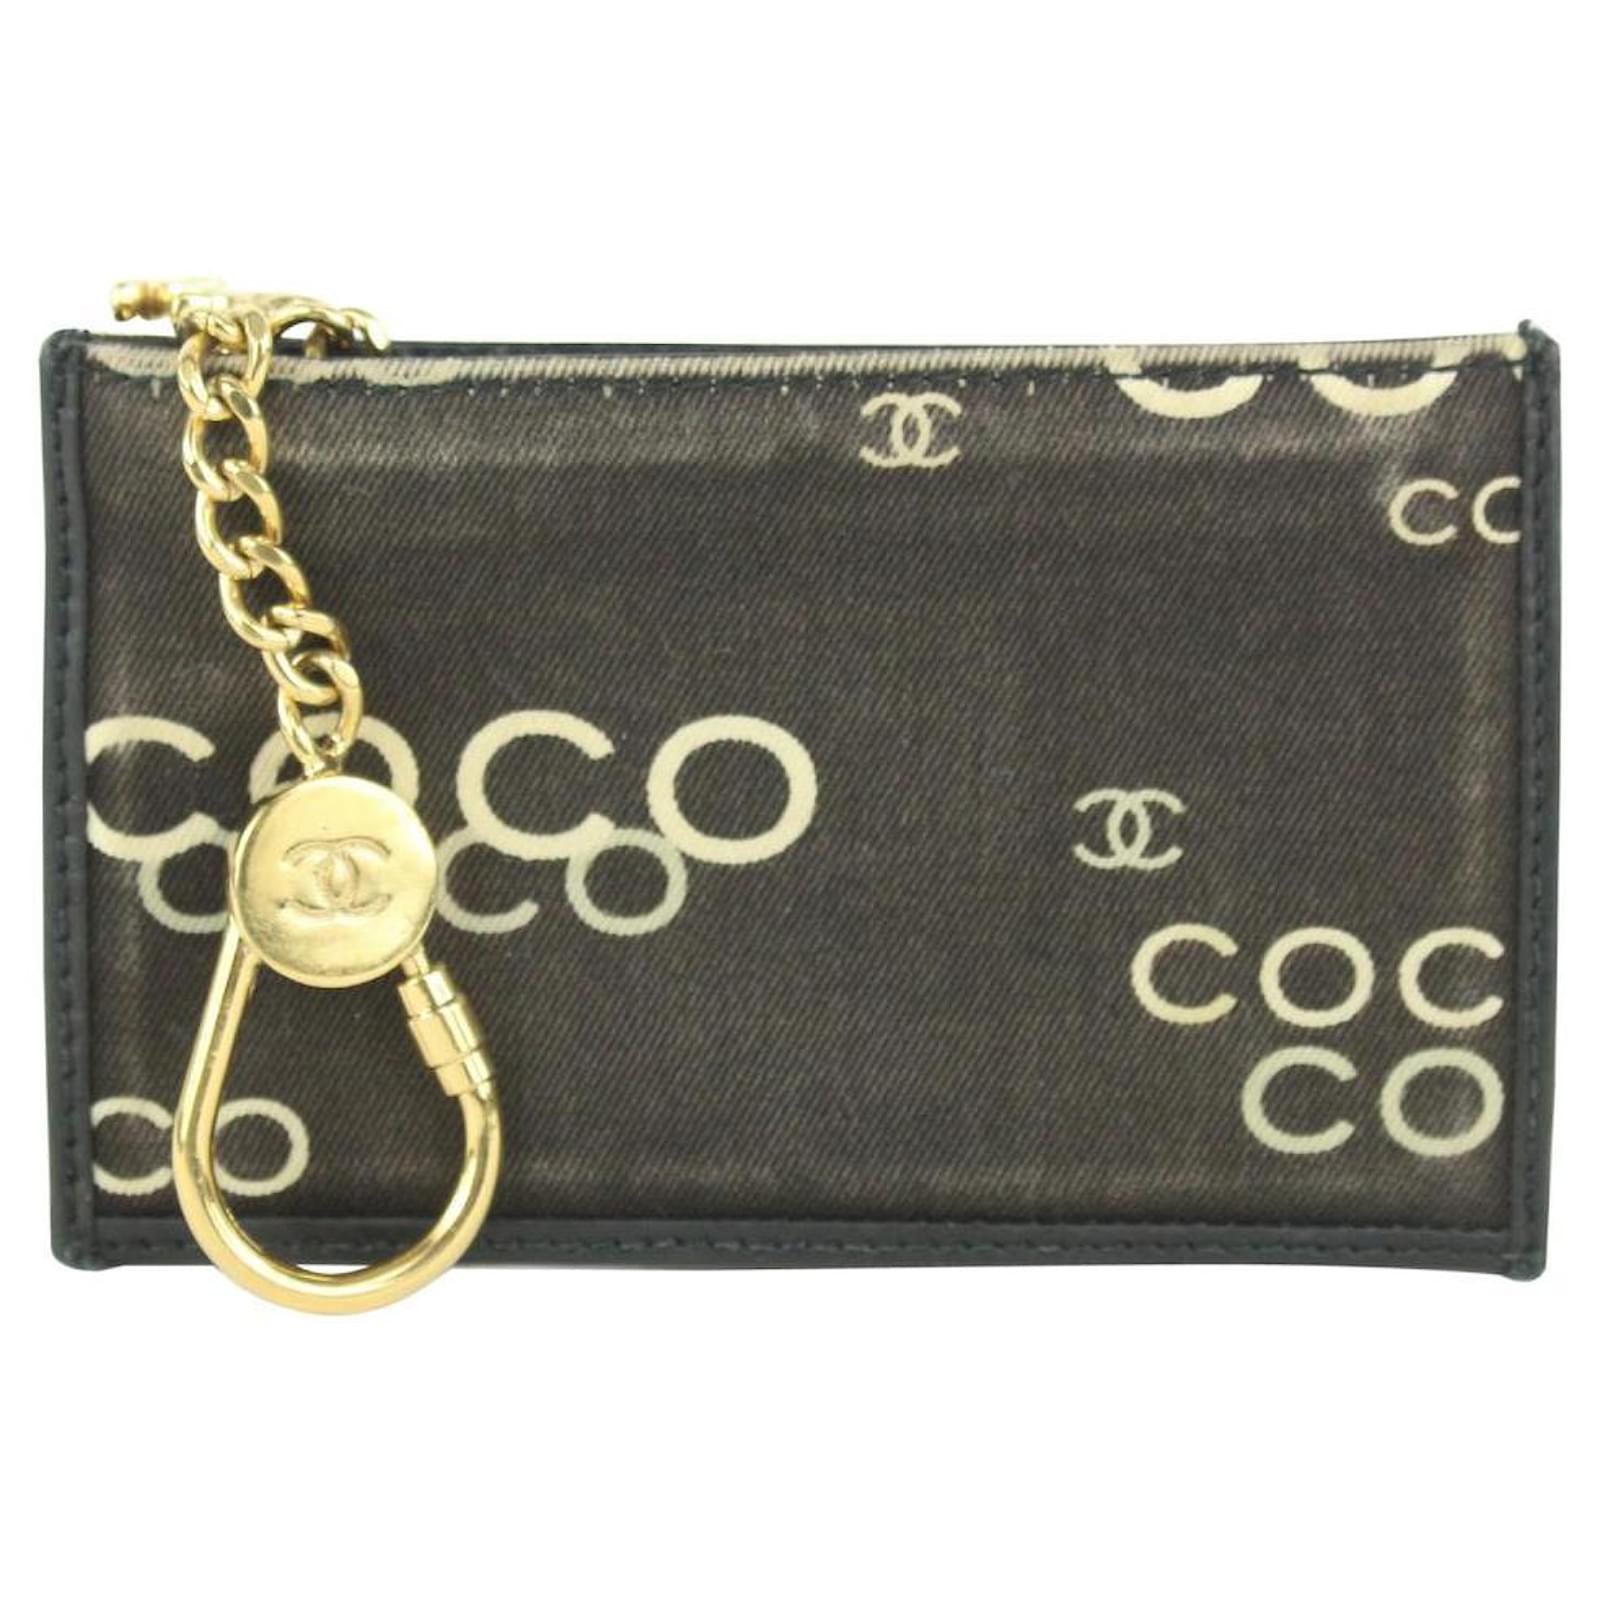 CHANEL Mini Mini Matelasse Bag Key Ring Key Holder Bag Charm from Japan   eBay